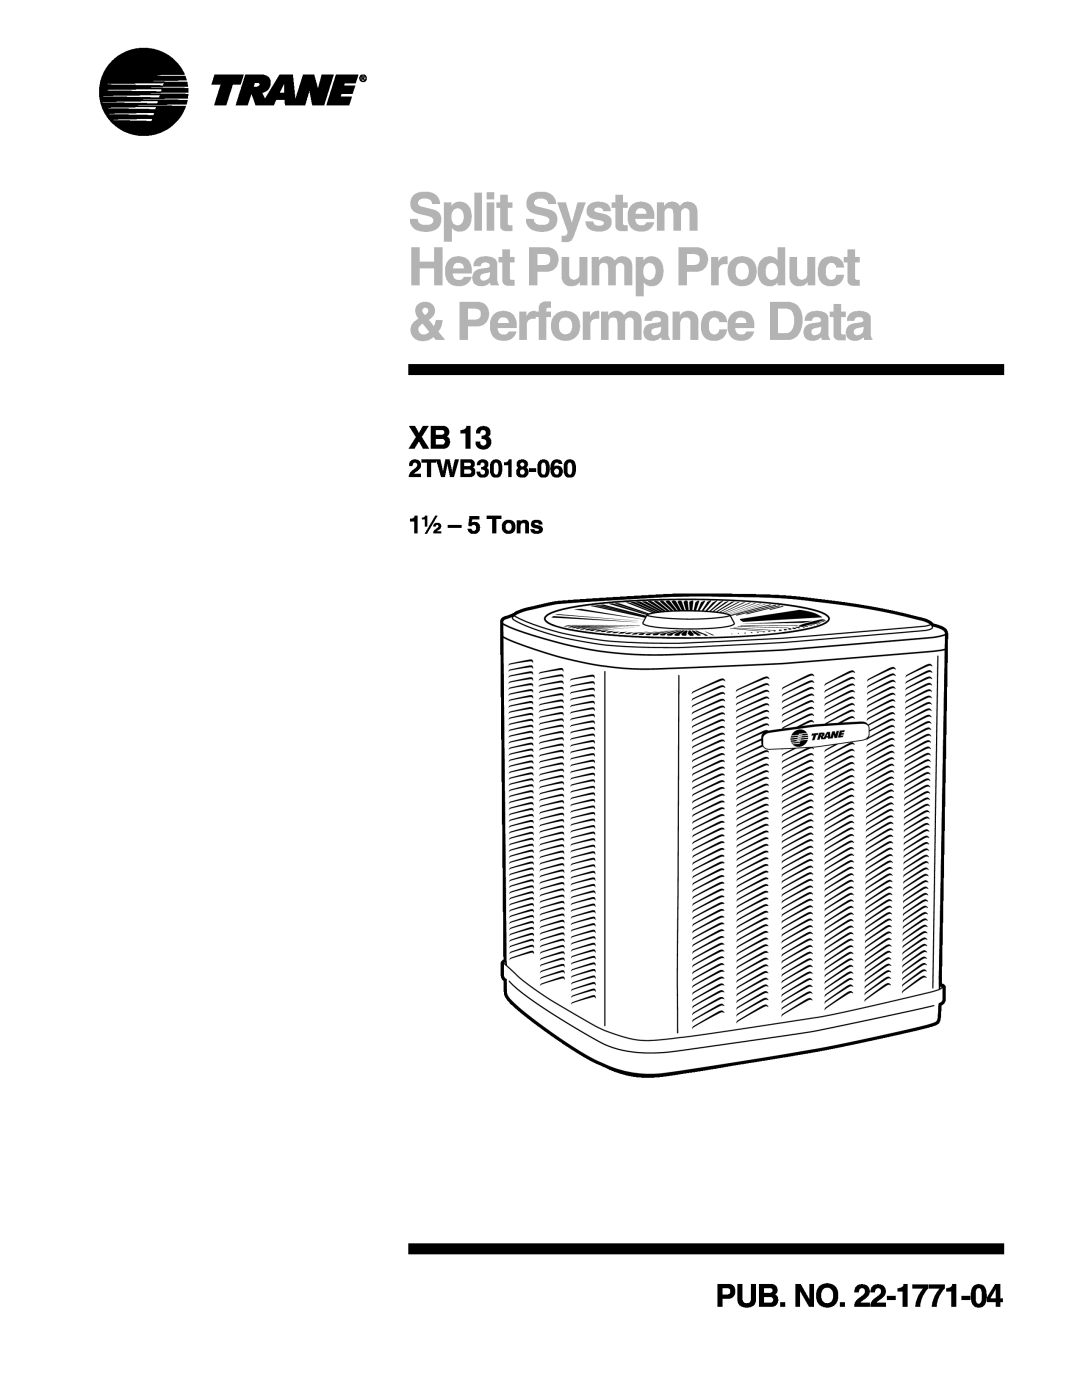 Trane 2TWB3018-060 manual Split System Heat Pump Product & Performance Data, Pub. No 